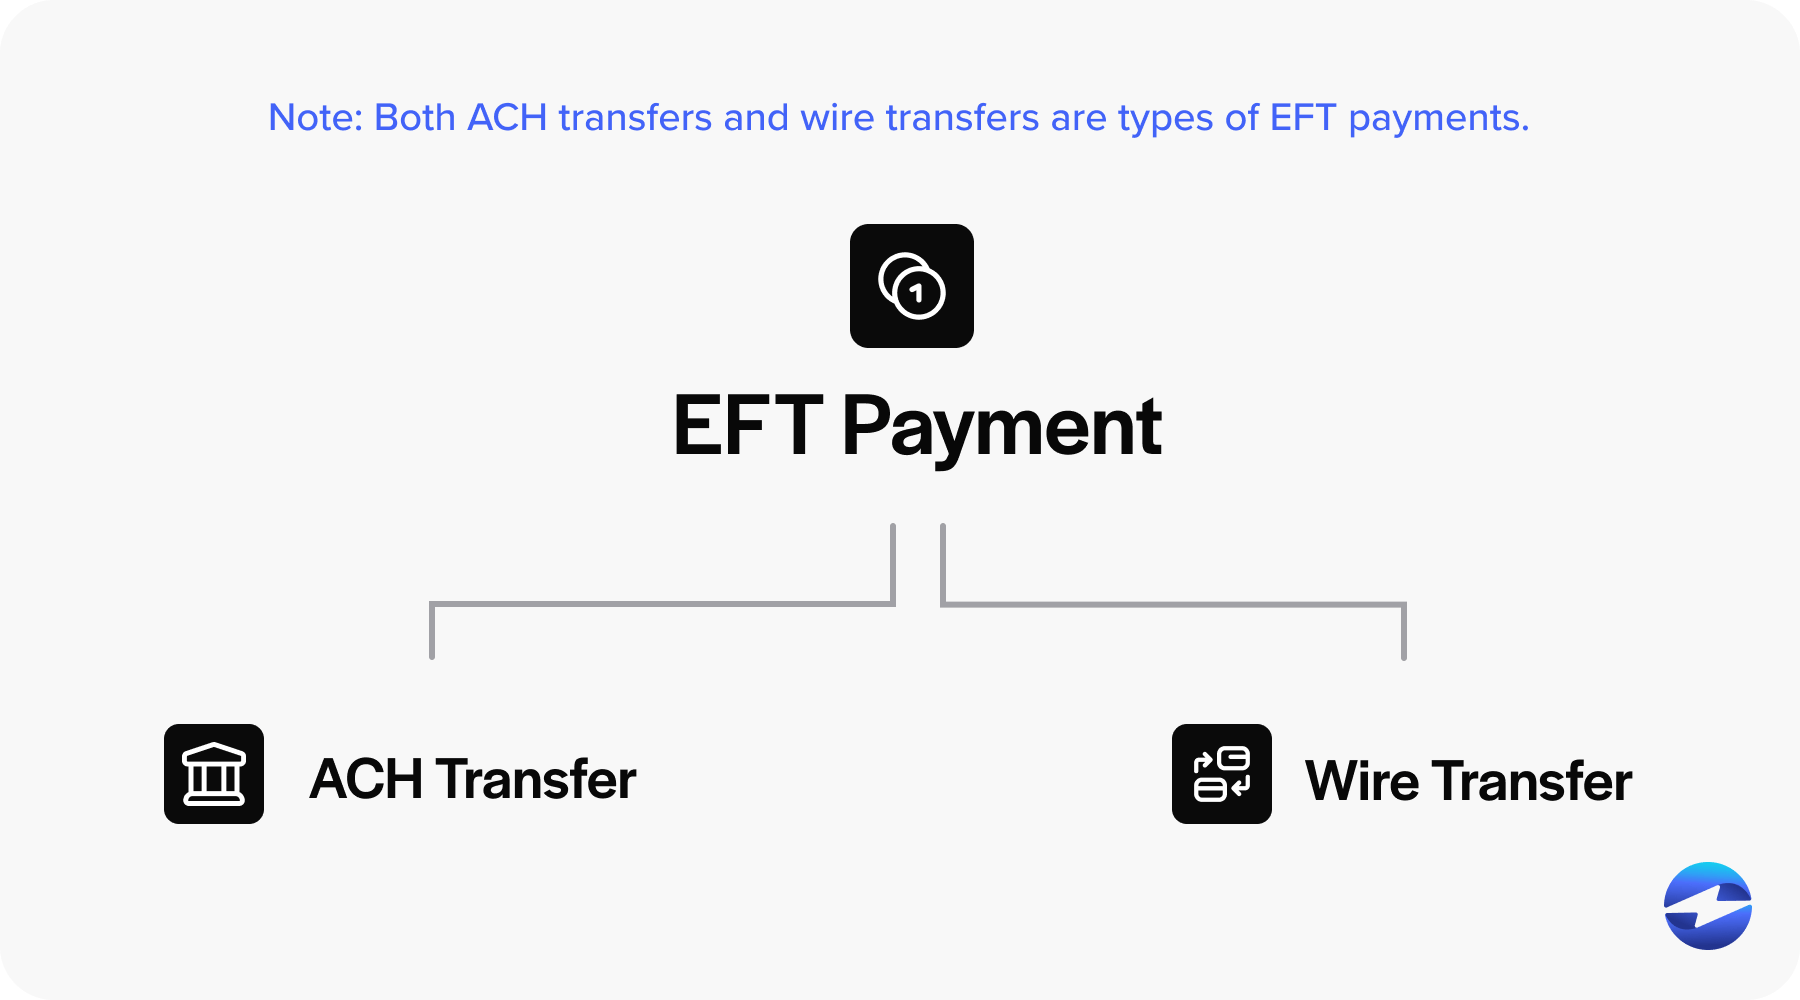 EFT Payments